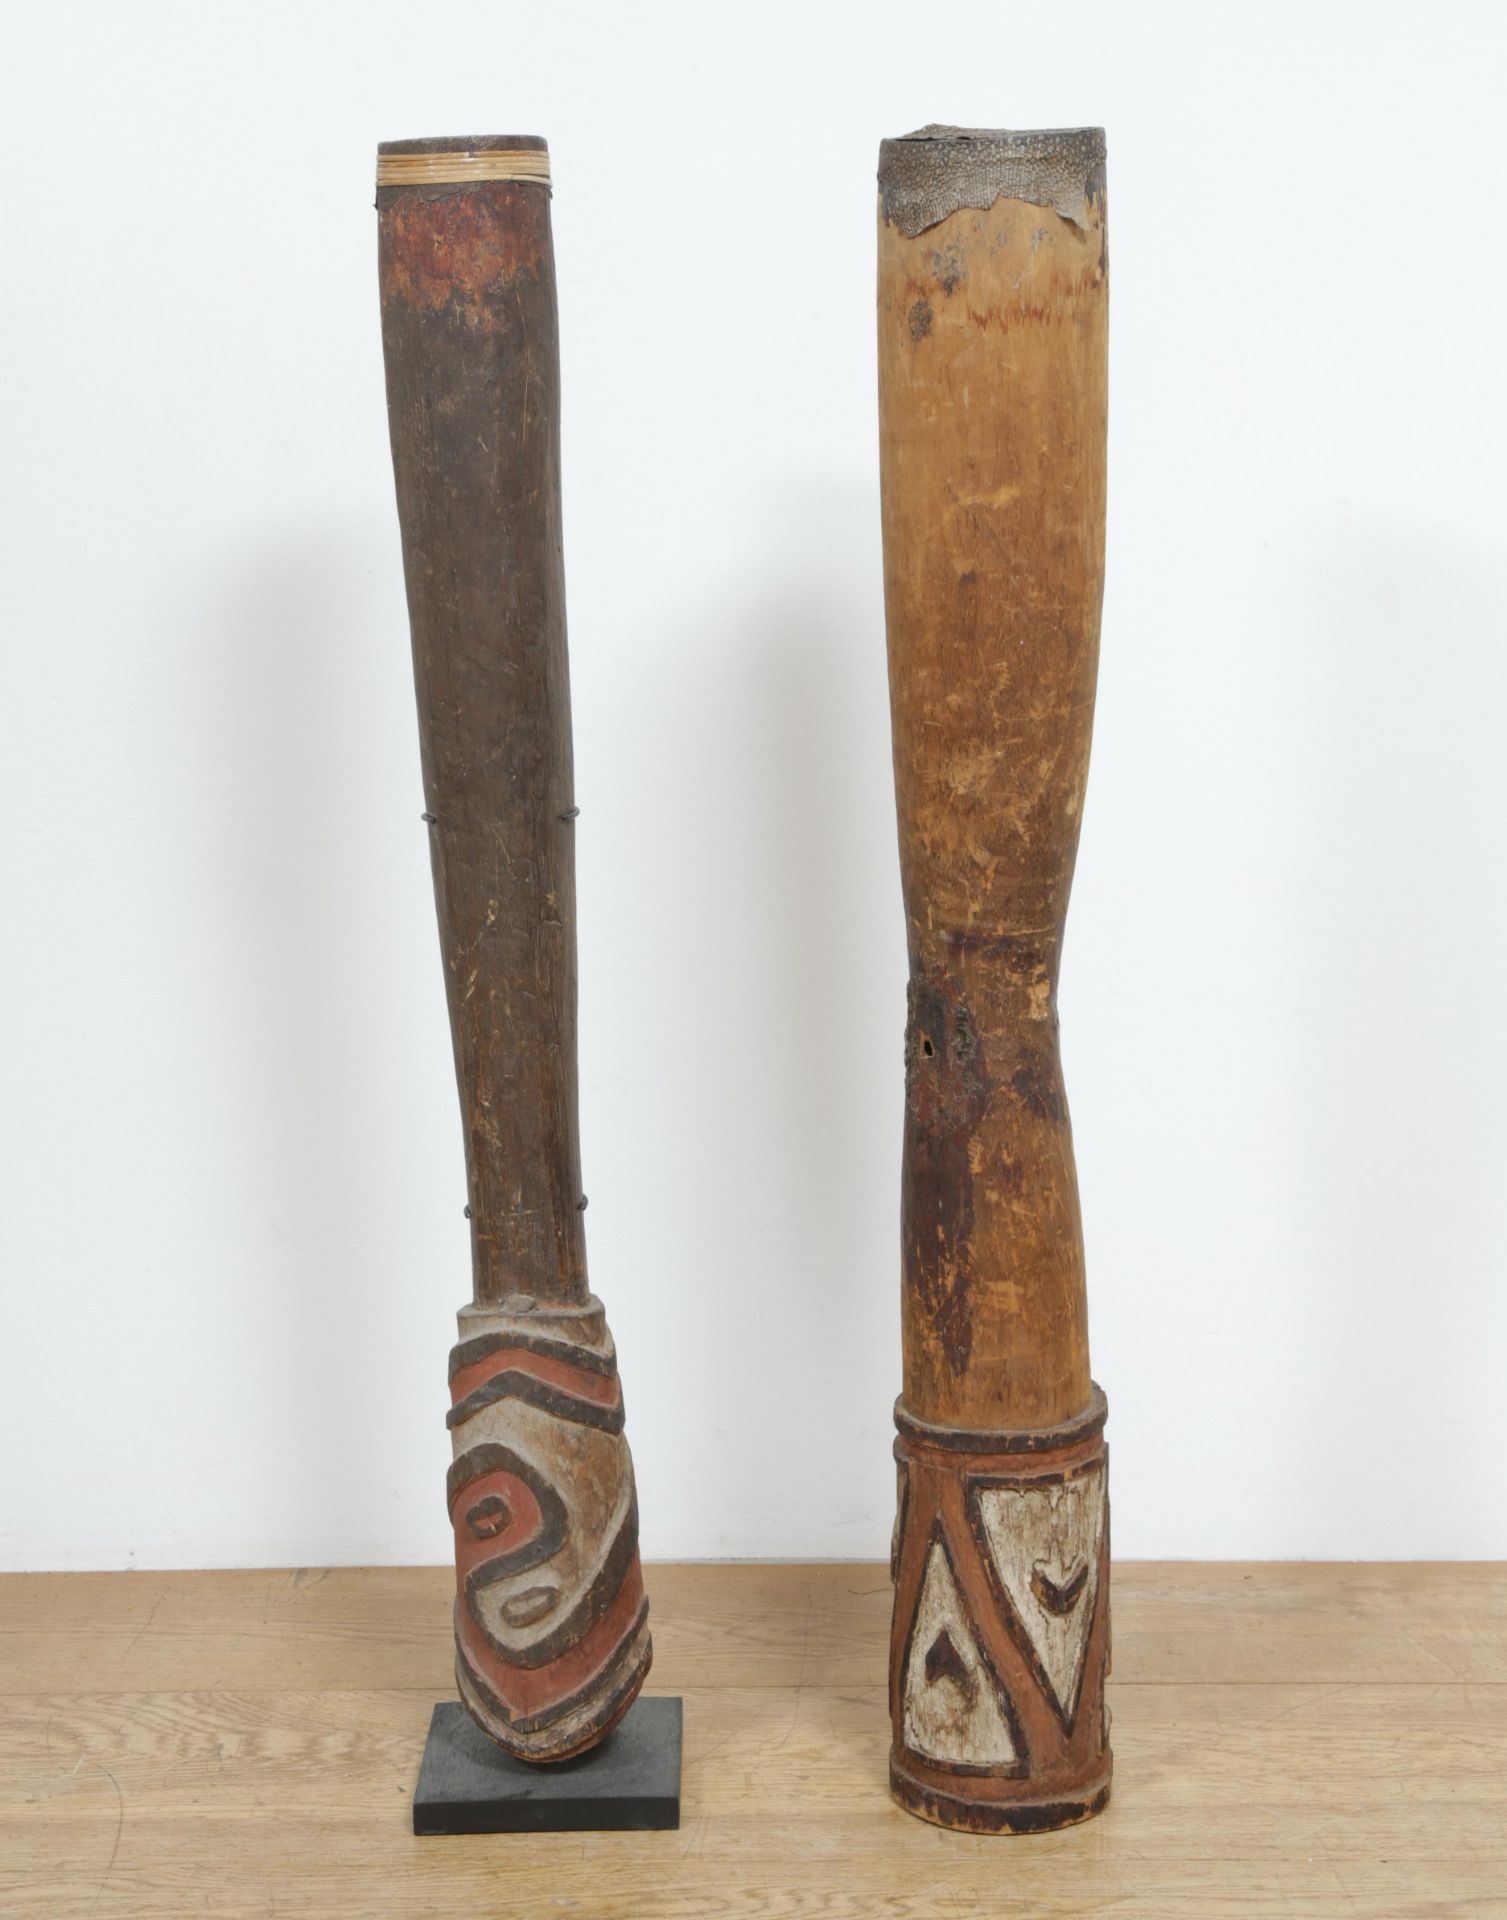 P.N. Guinea, two slender elongated drum